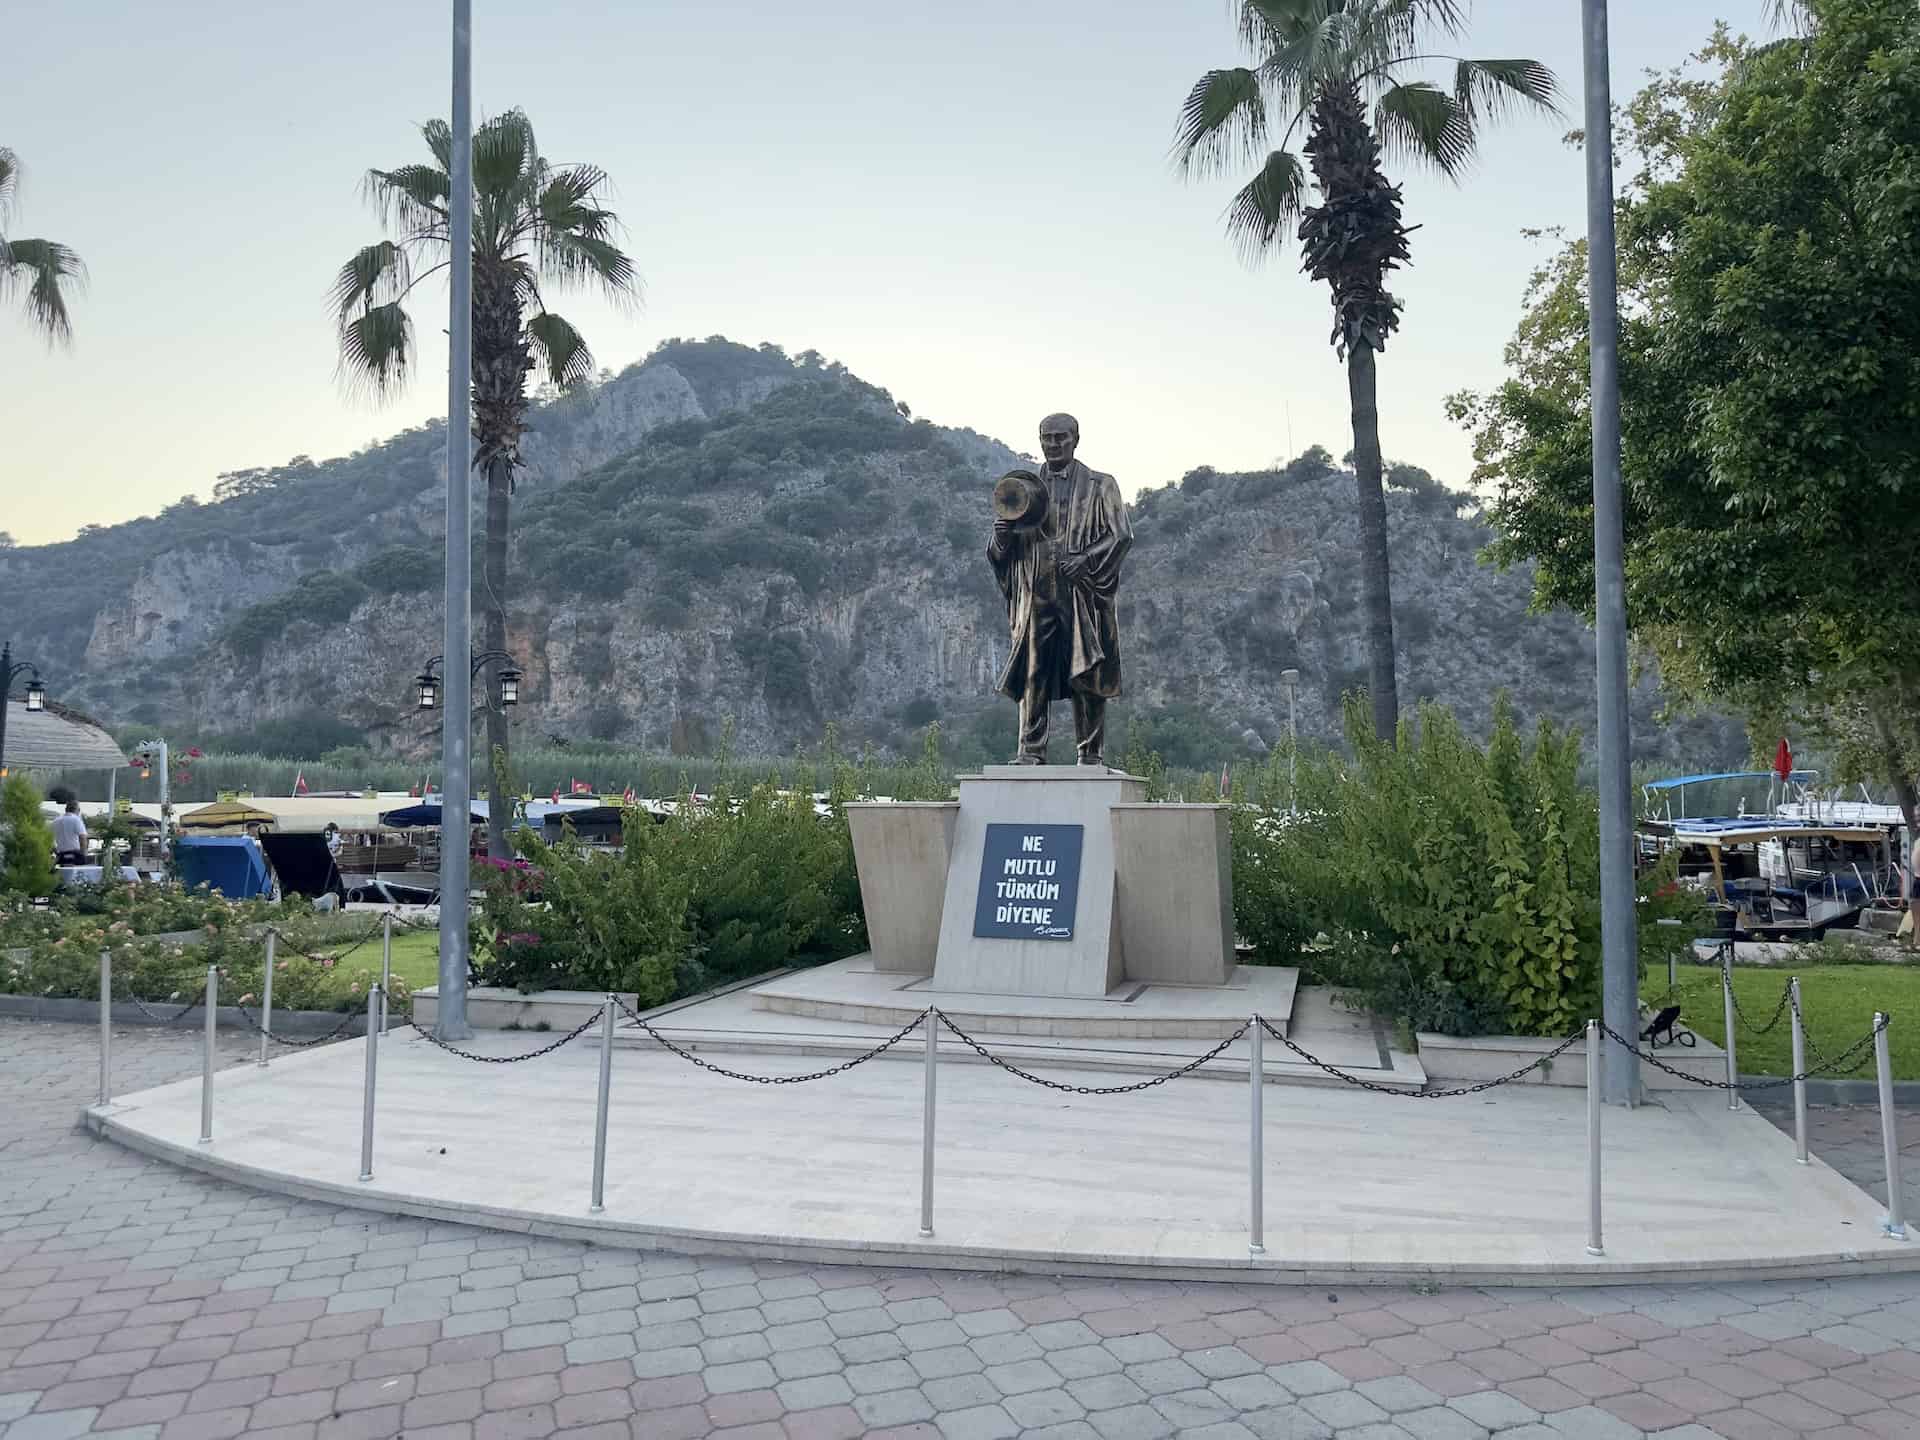 Atatürk statue